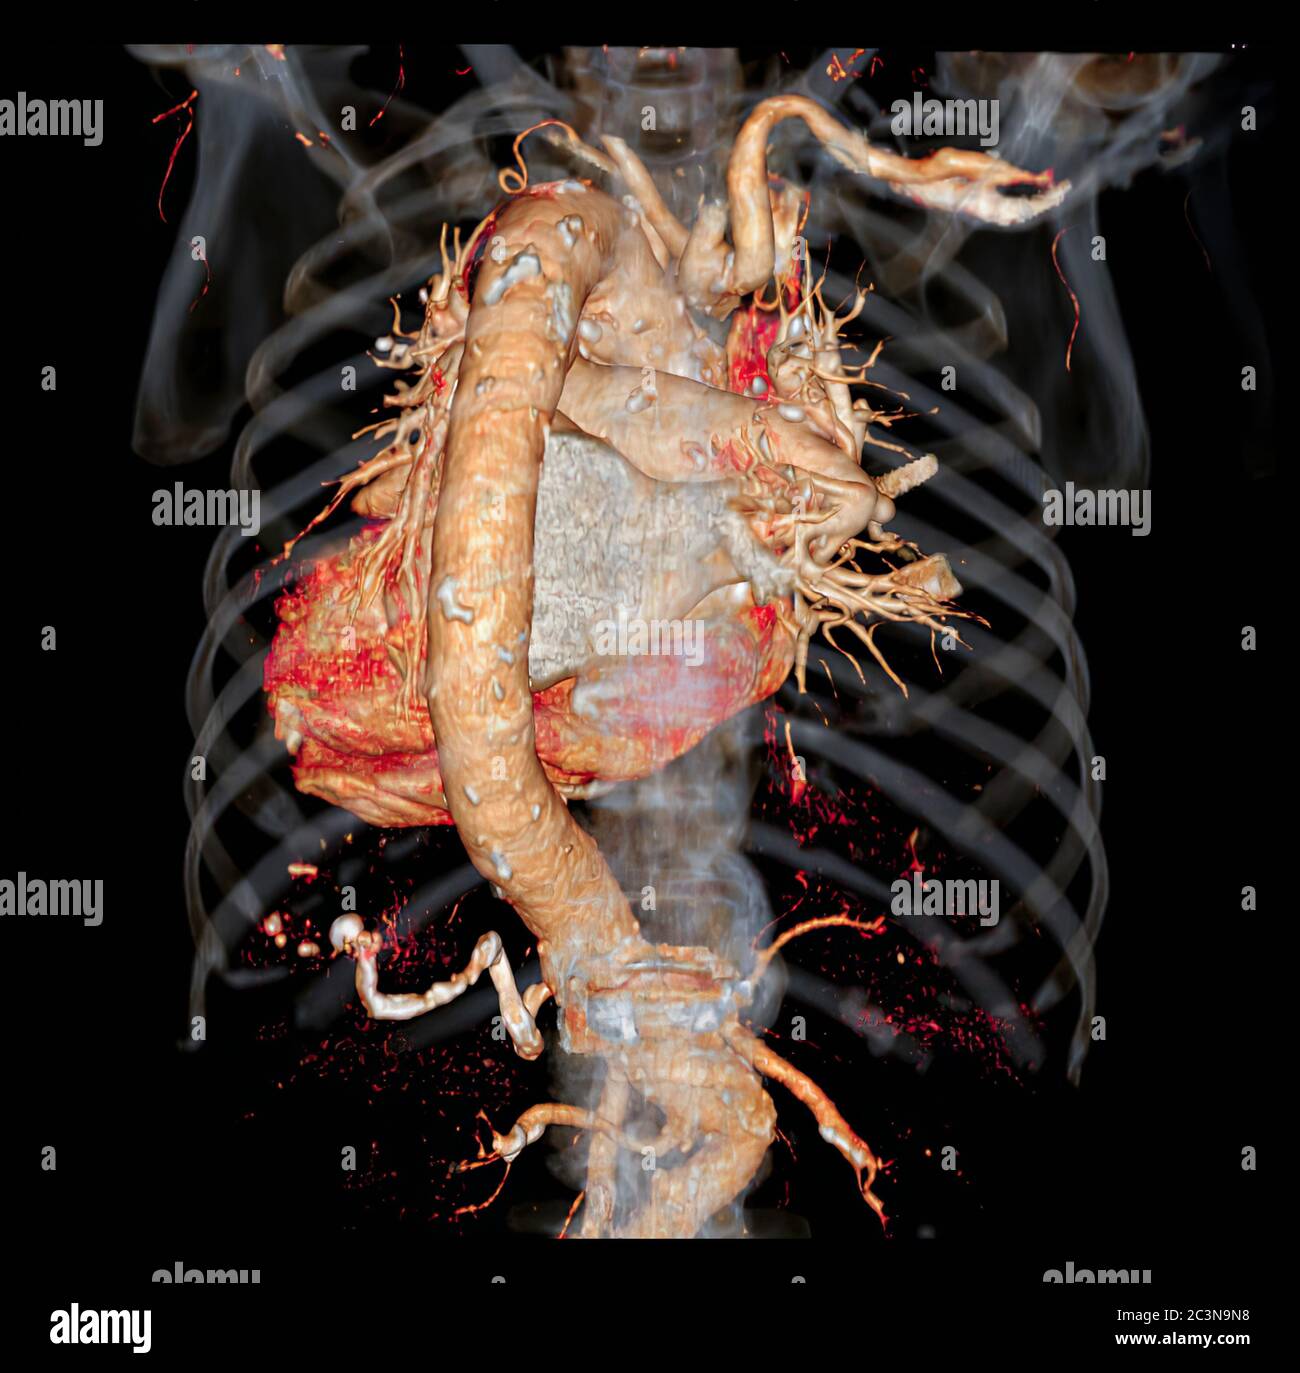 CTA aorta toracica 3D immagine di rendering vista posteriore o vista posteriore per aneurisma aortico addominale diagnostico o dissezione aortica e AAA Foto Stock